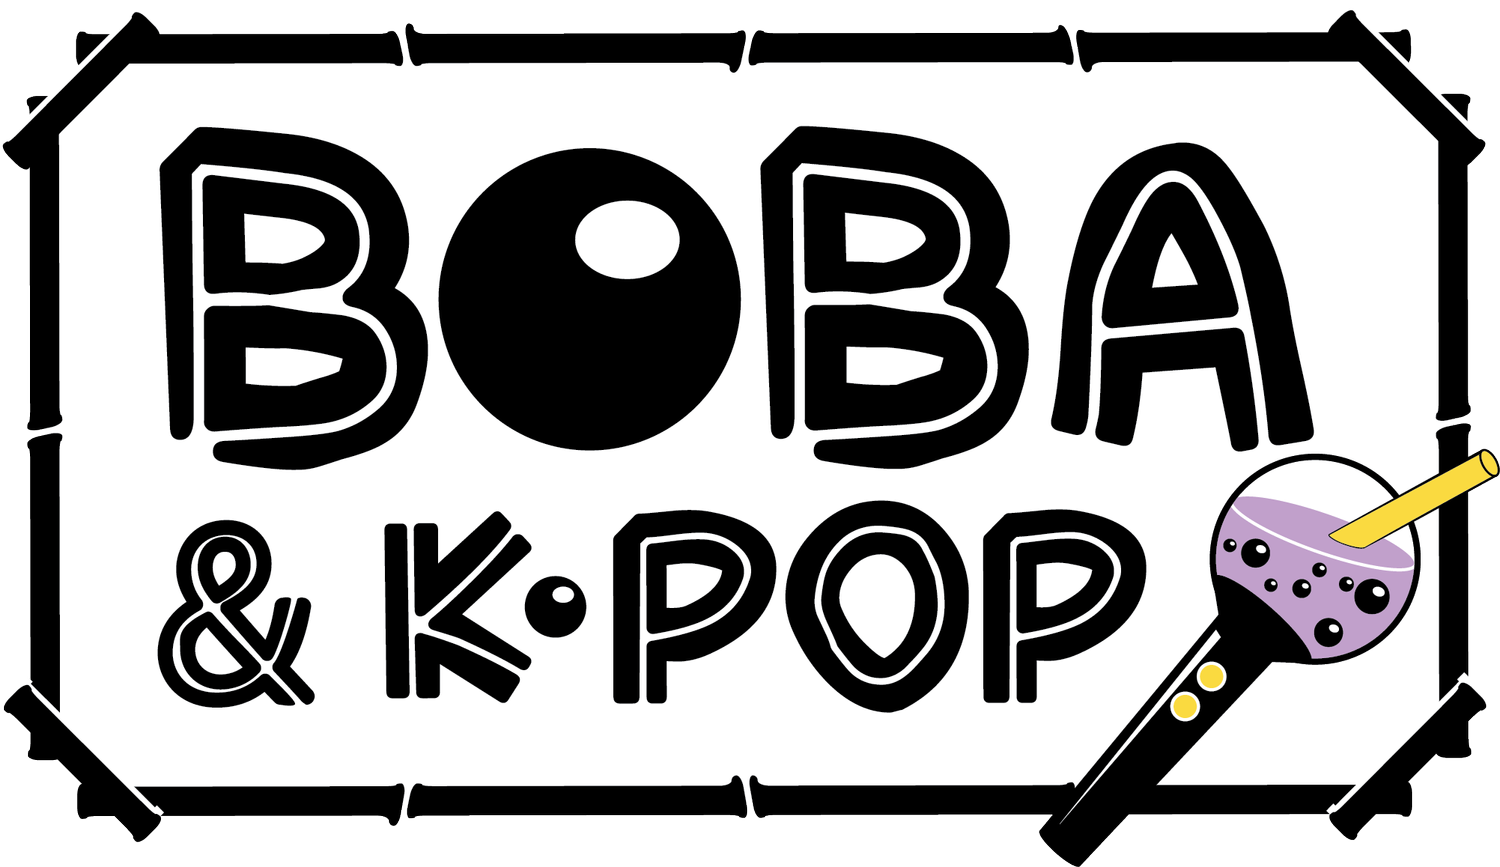 Boba &amp; K-Pop